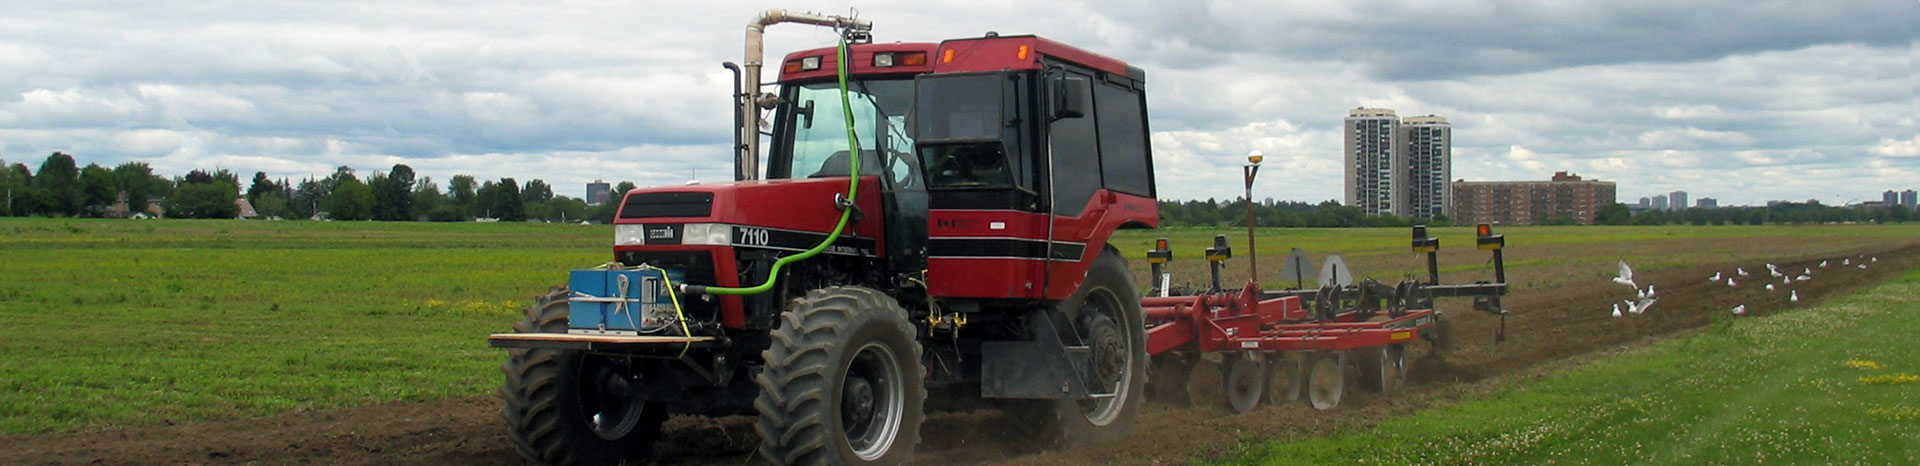 Farm tractor PEMS testing